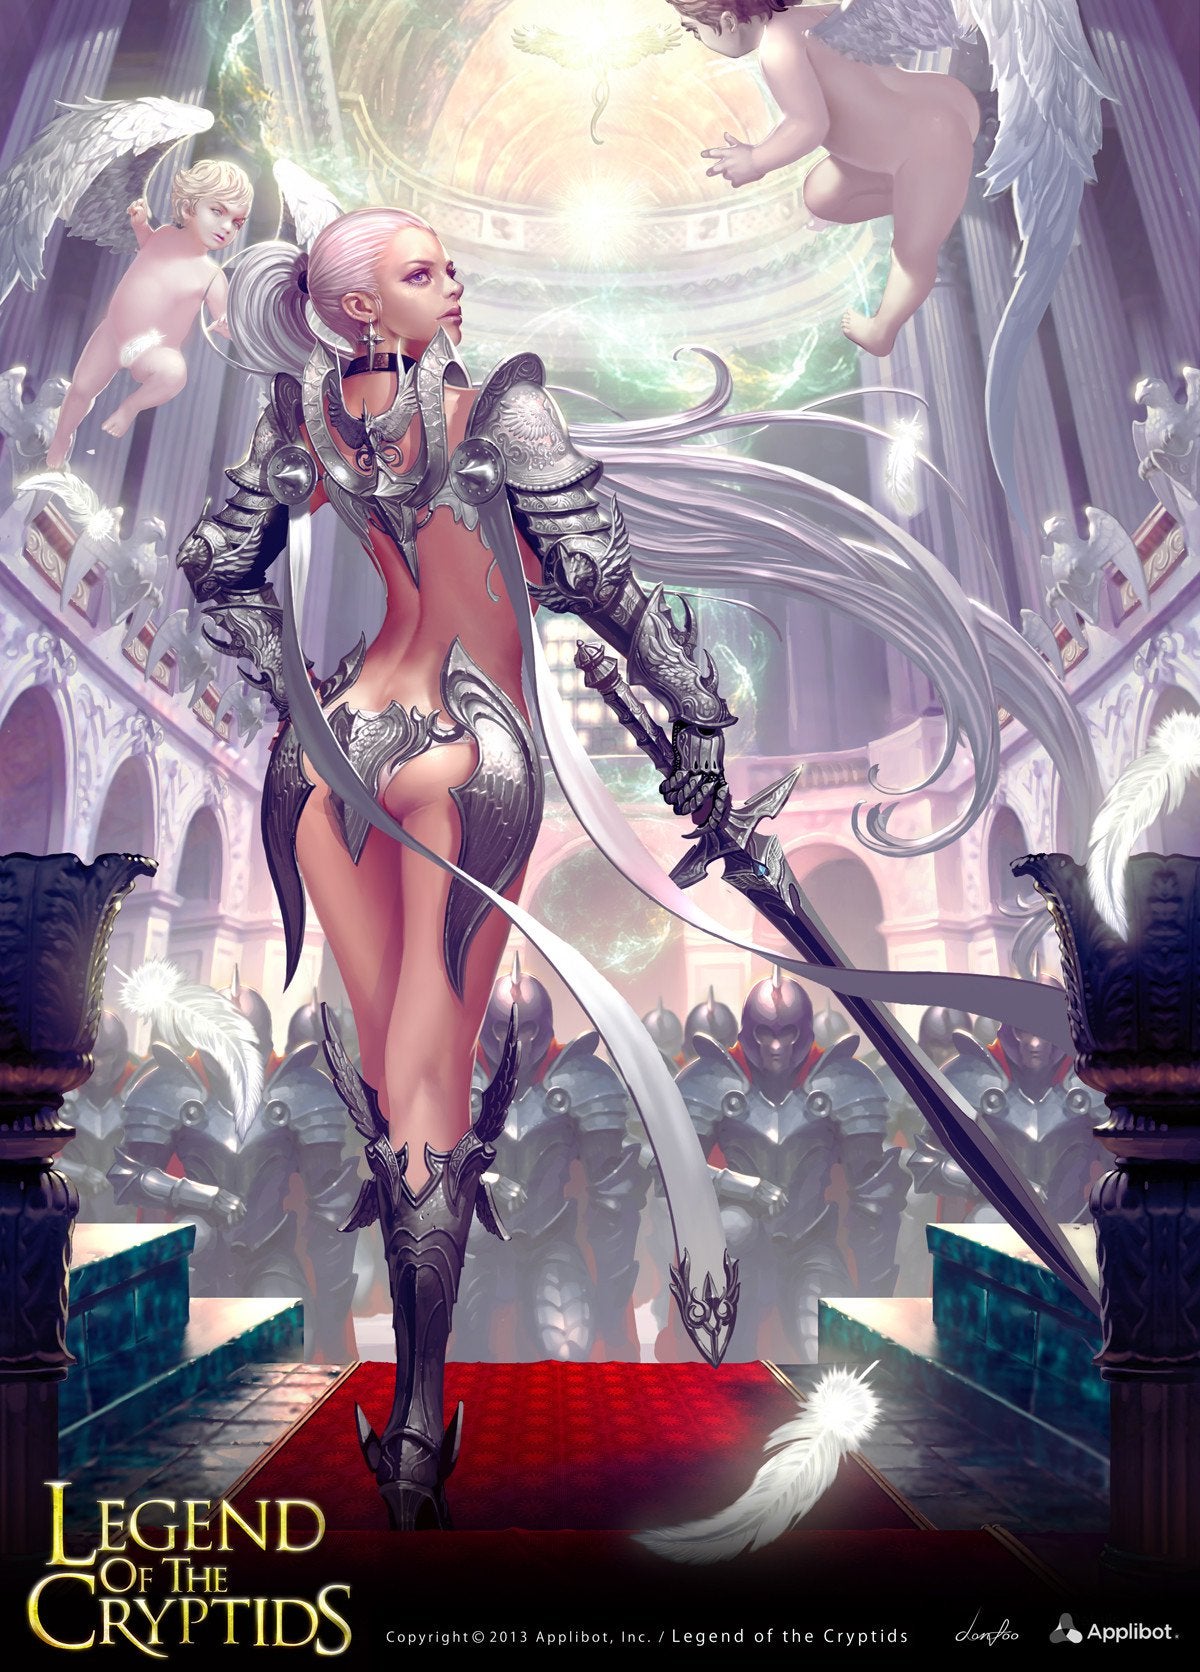 General 1200x1672 Legend of the Cryptids warrior sword armor army angel purple eyes back fantasy art fantasy girl digital art artwork